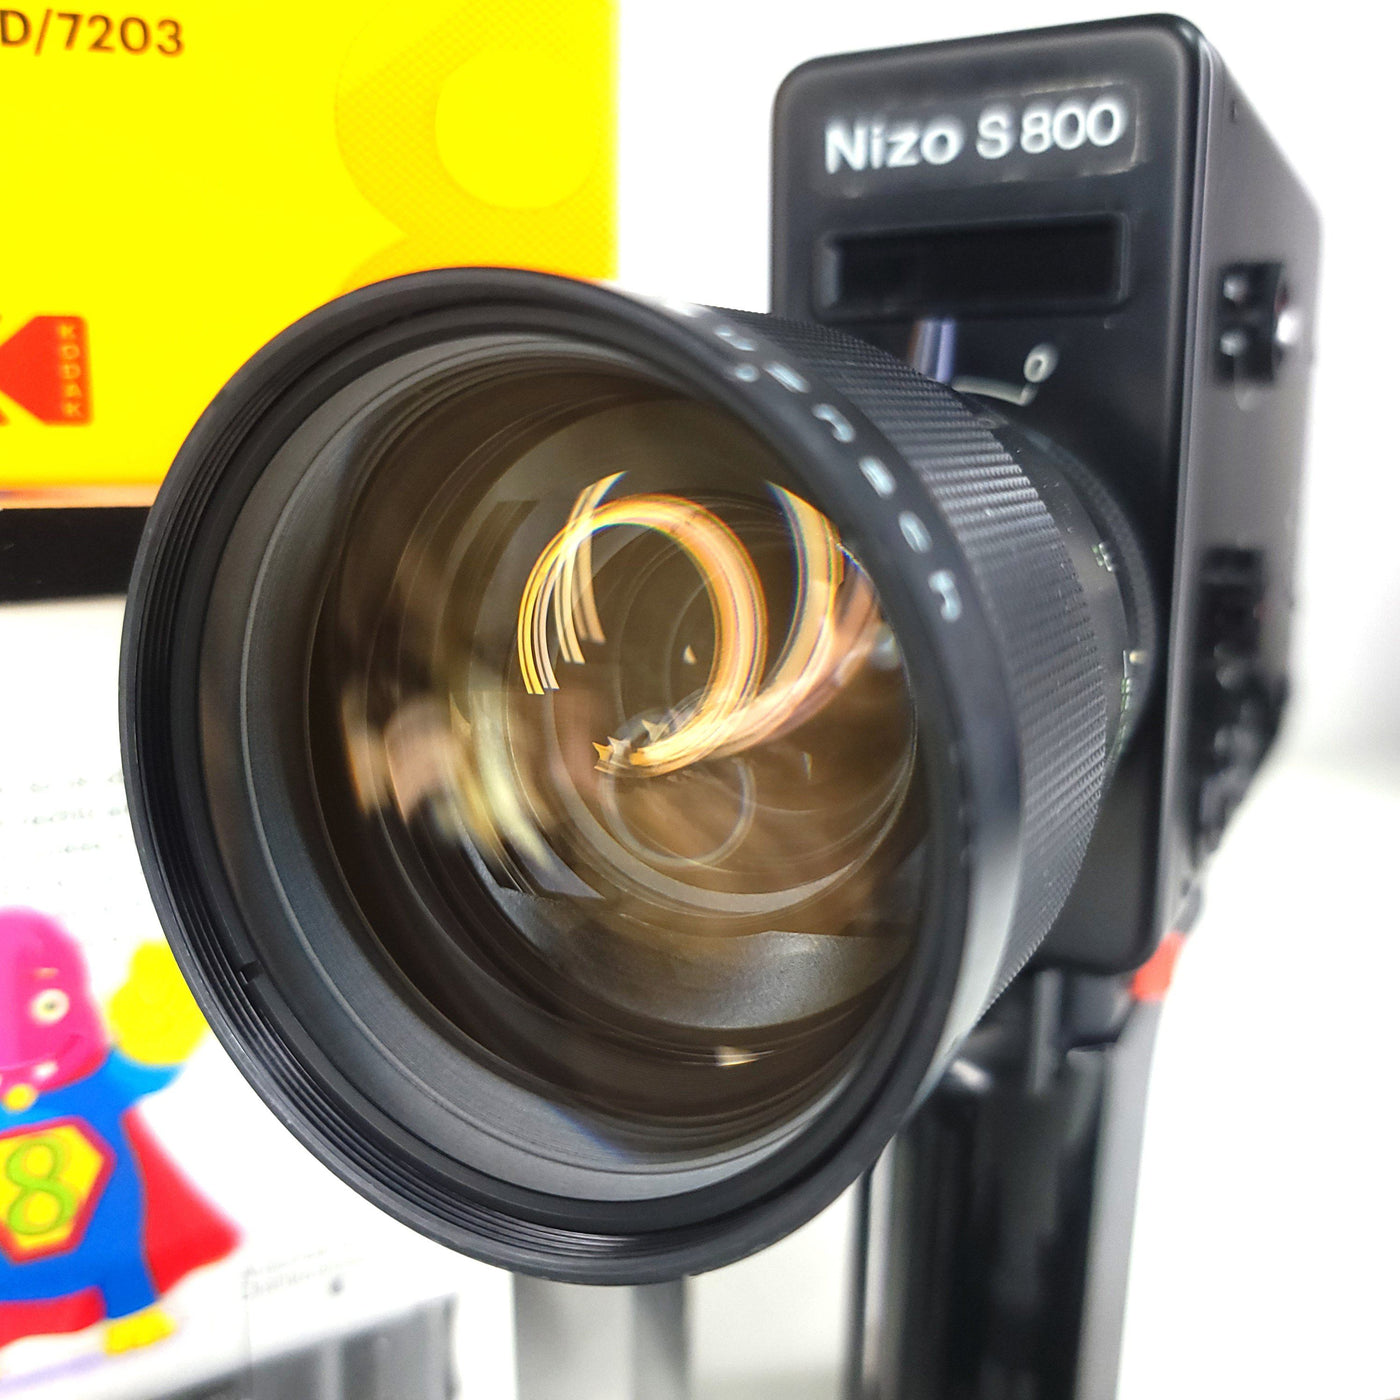 Nizo S800 Super 8 Camera Filmmaker's Bundle with plenty of Accessories! Super 8 Cameras Braun Nizo 